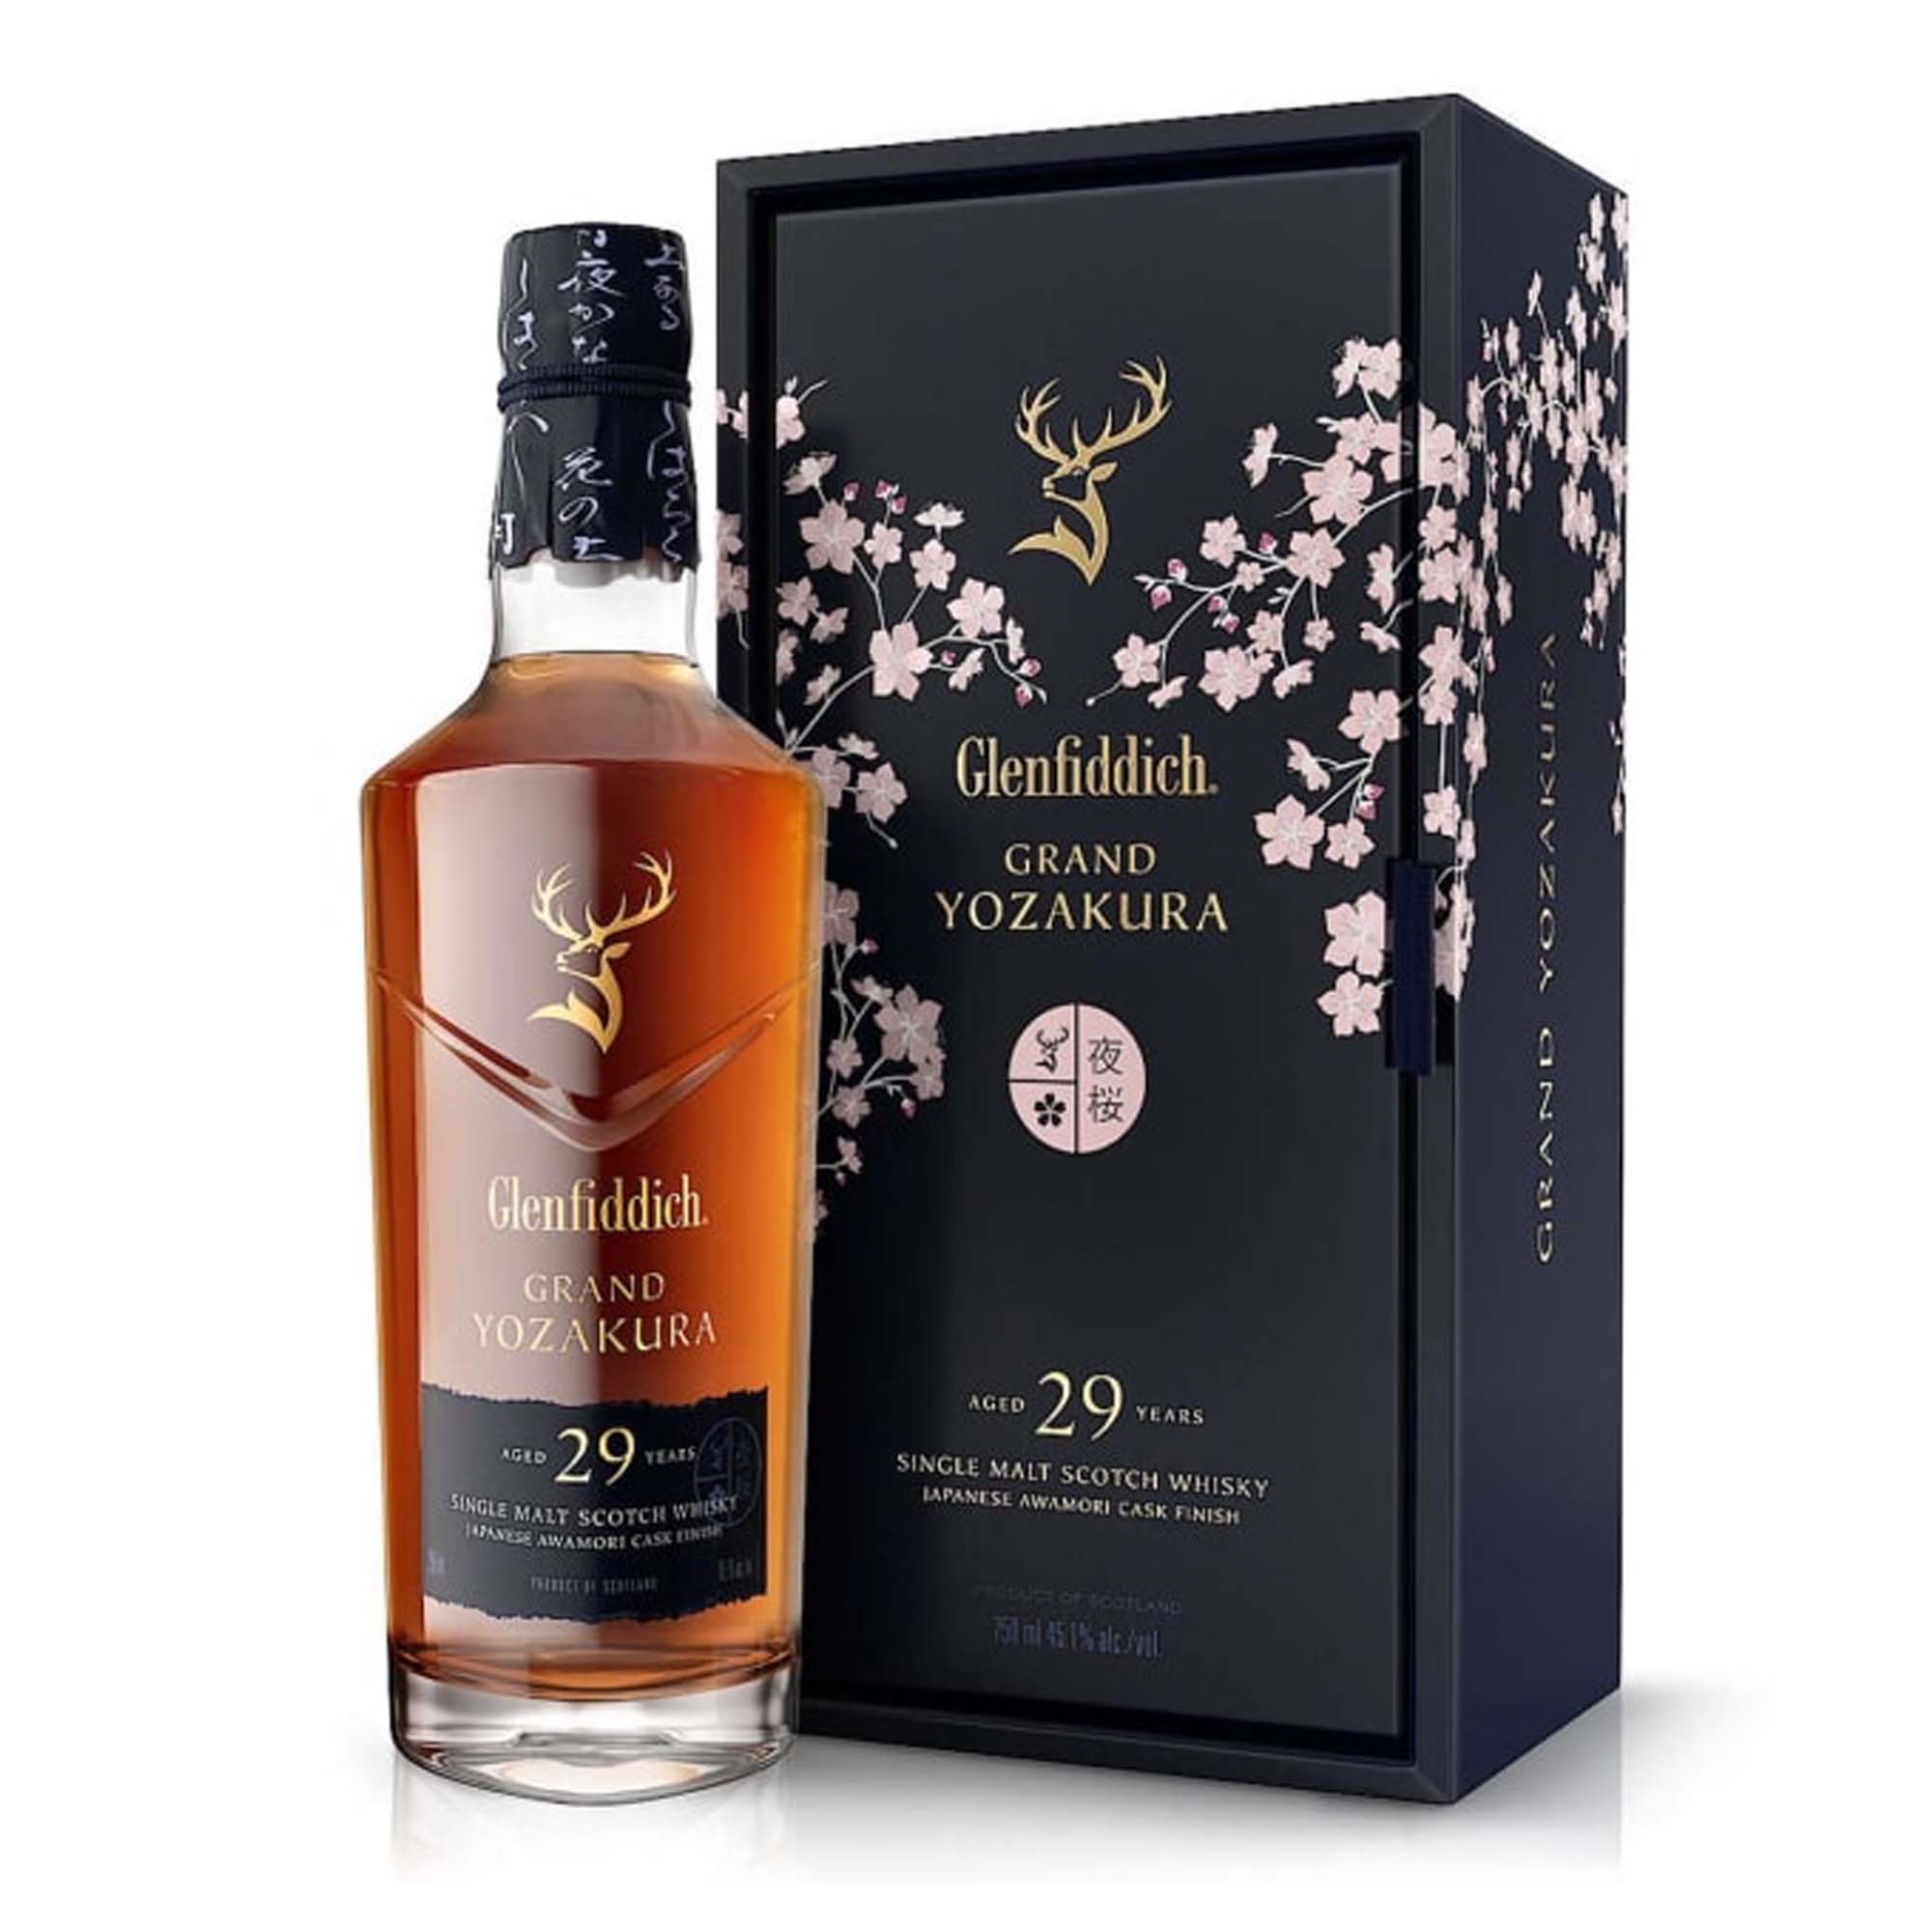 Glenfiddich 29 Year Grand Yozakura Single Malt Scotch Whisky